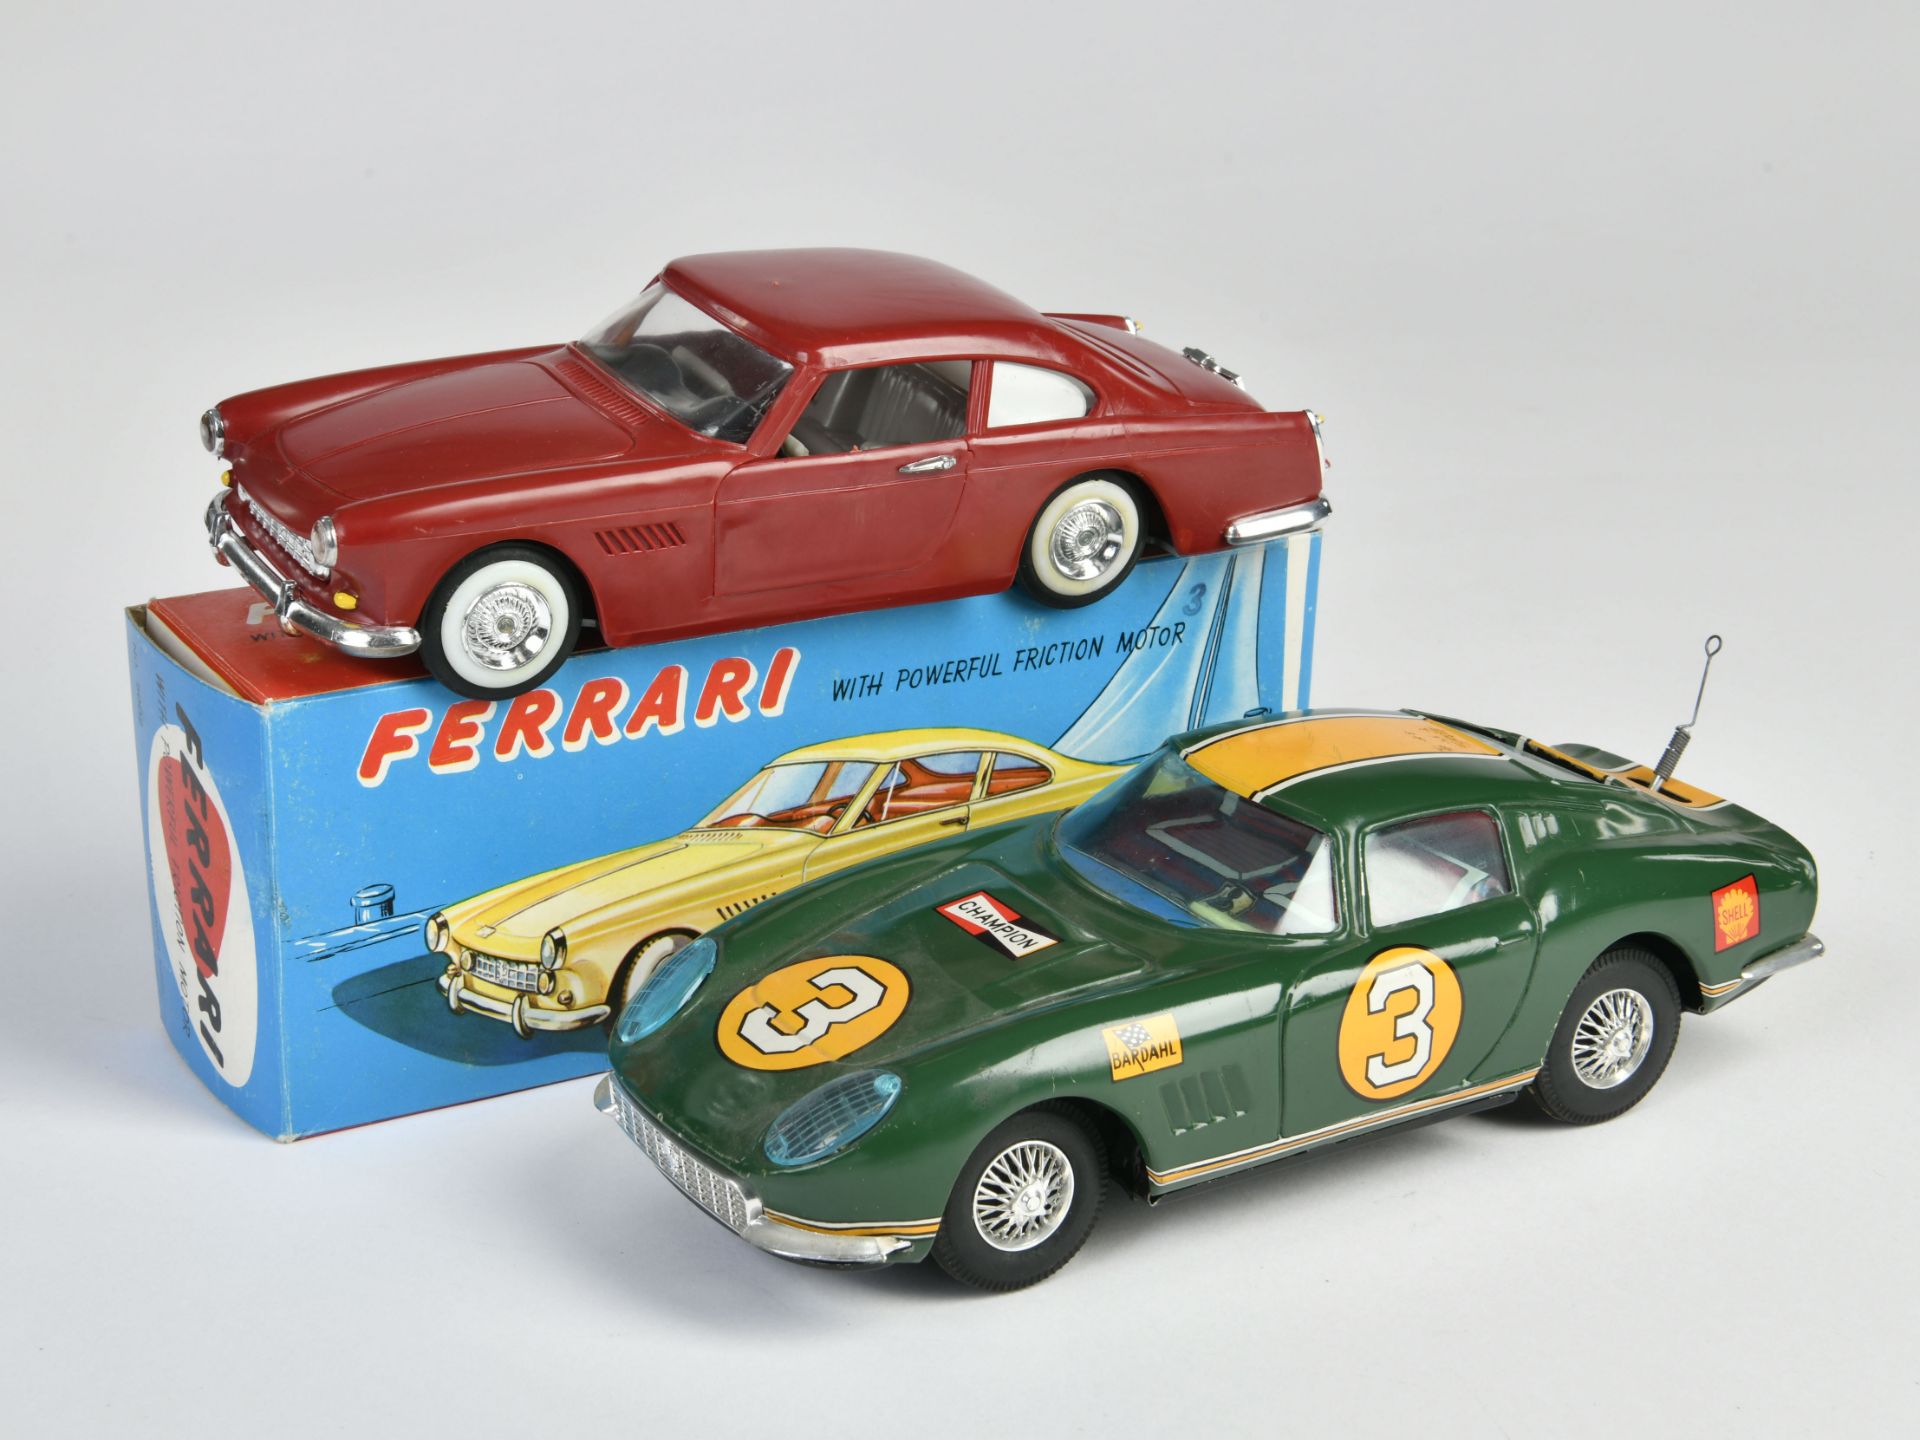 Bandai & W Toys, 2x Ferrari, Japan, Hong Kong, 20-22 cm, tin, plastic, friction ok, 1x box, C 2+